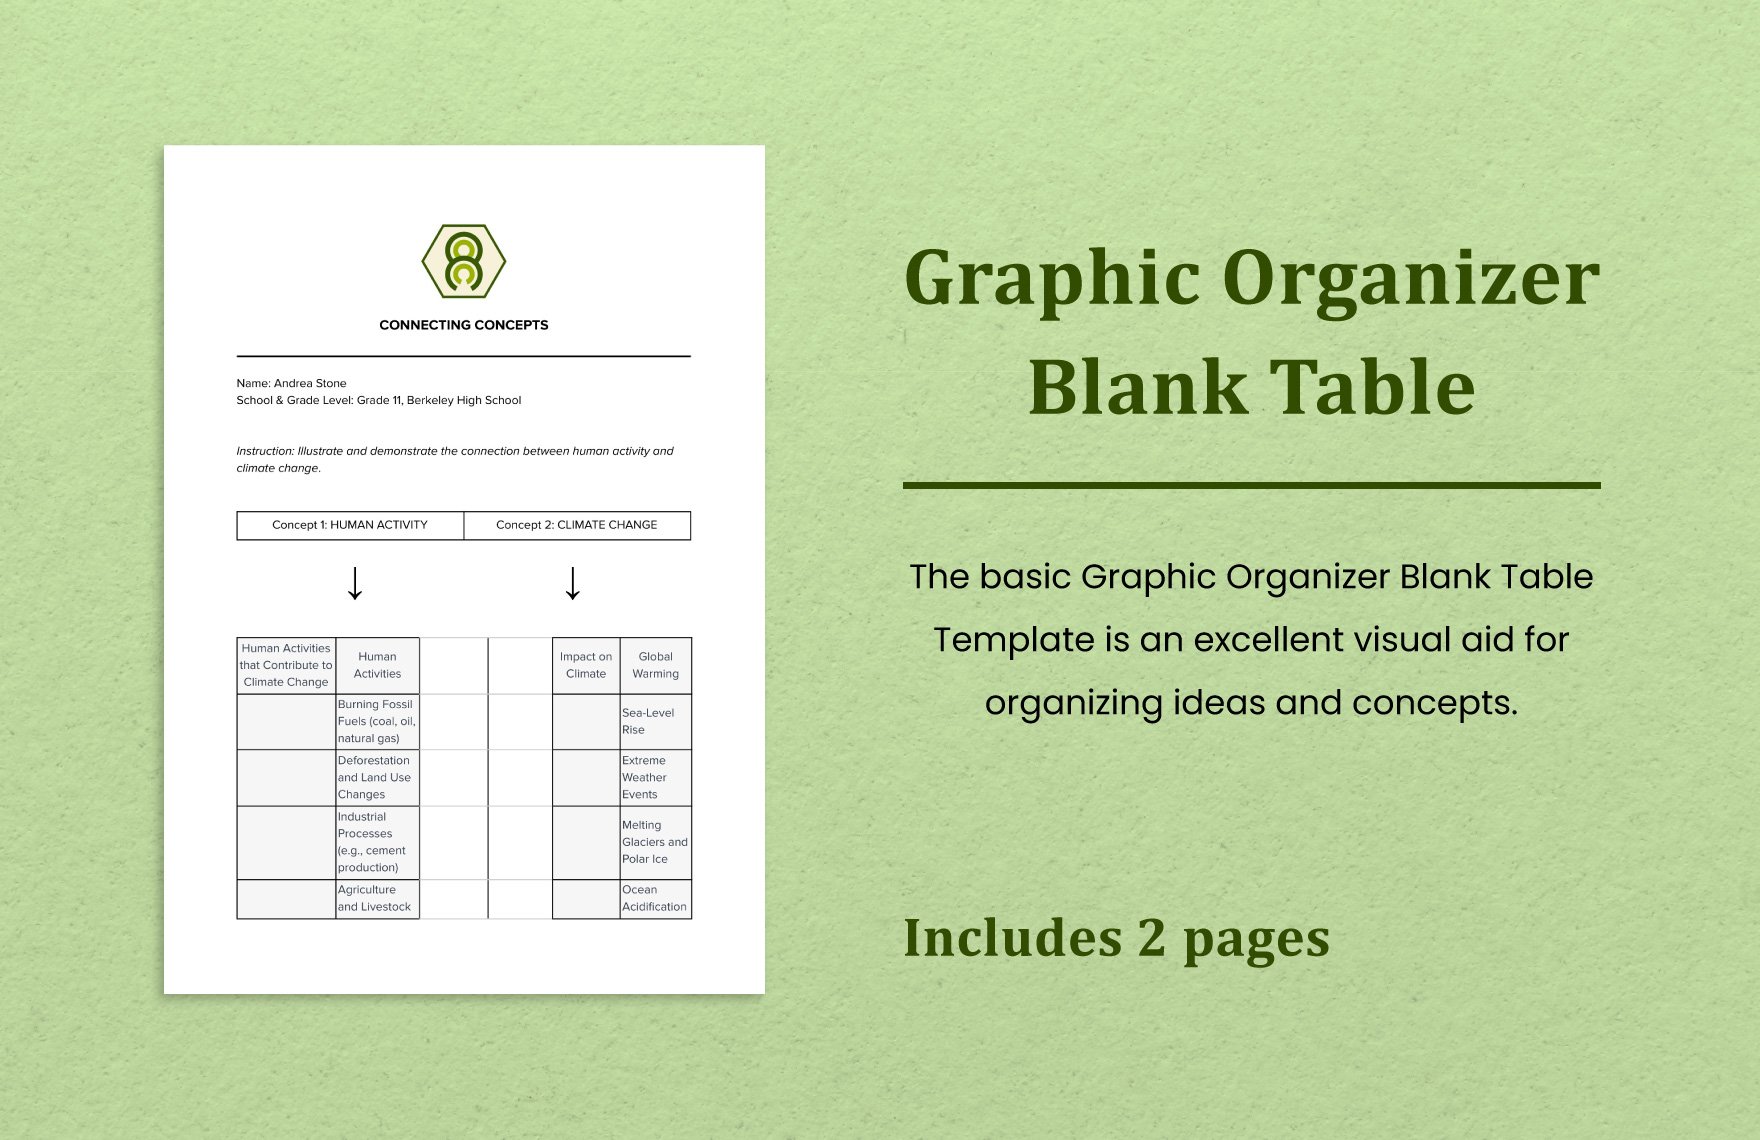 Graphic Organizer Blank Table